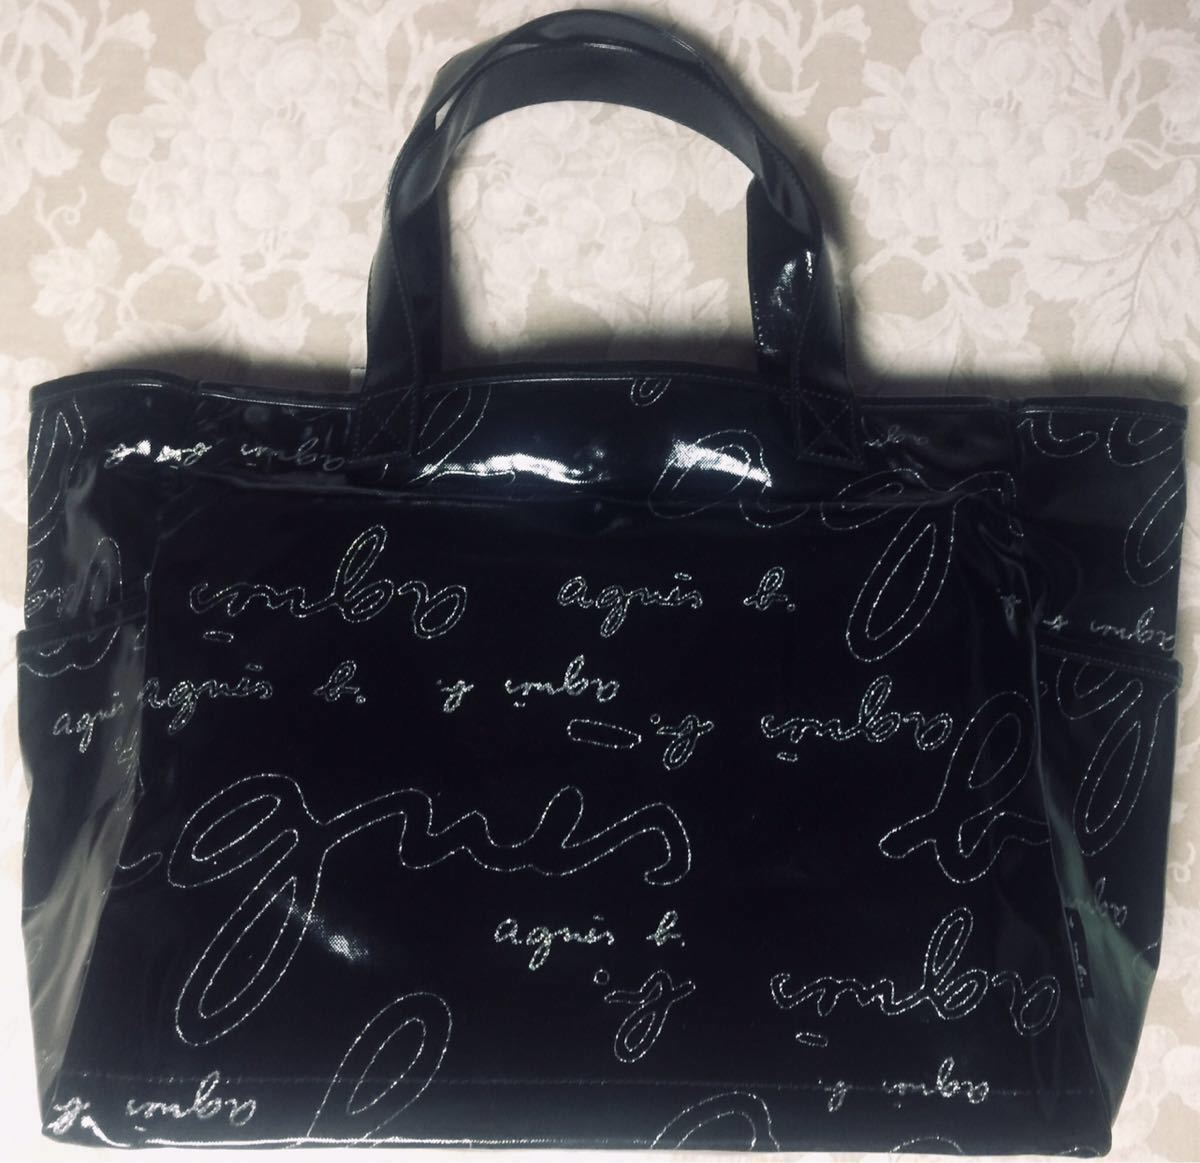 Agnes b tote bag (black)